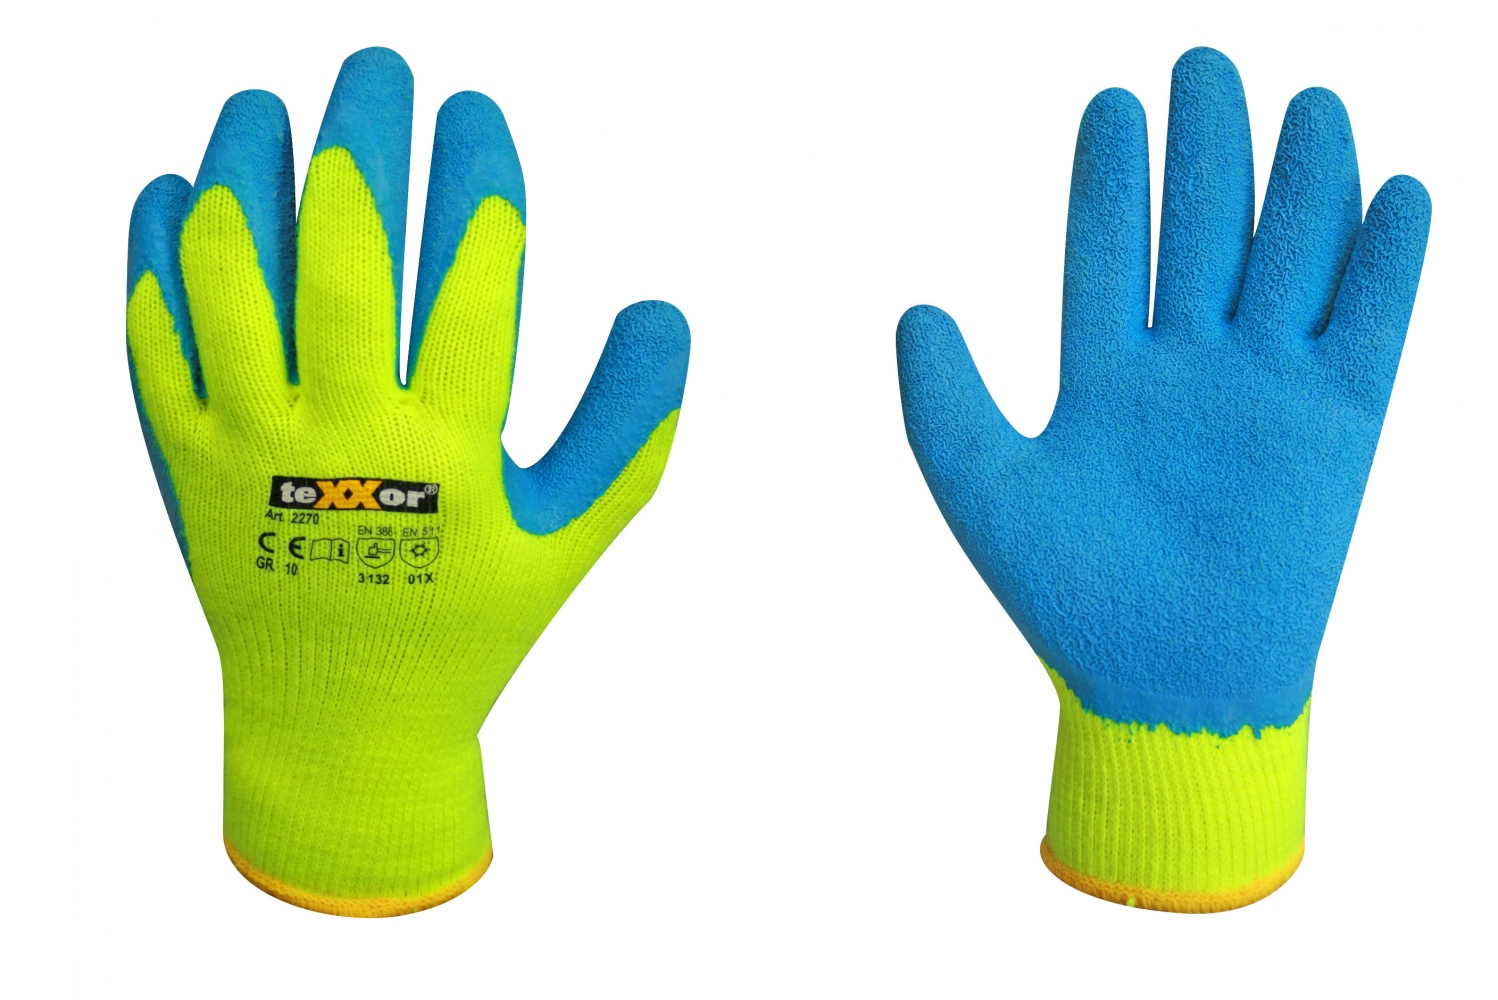 pics/Texxor/texxor-2270-latex-winter-gloves-yellow-2.jpg